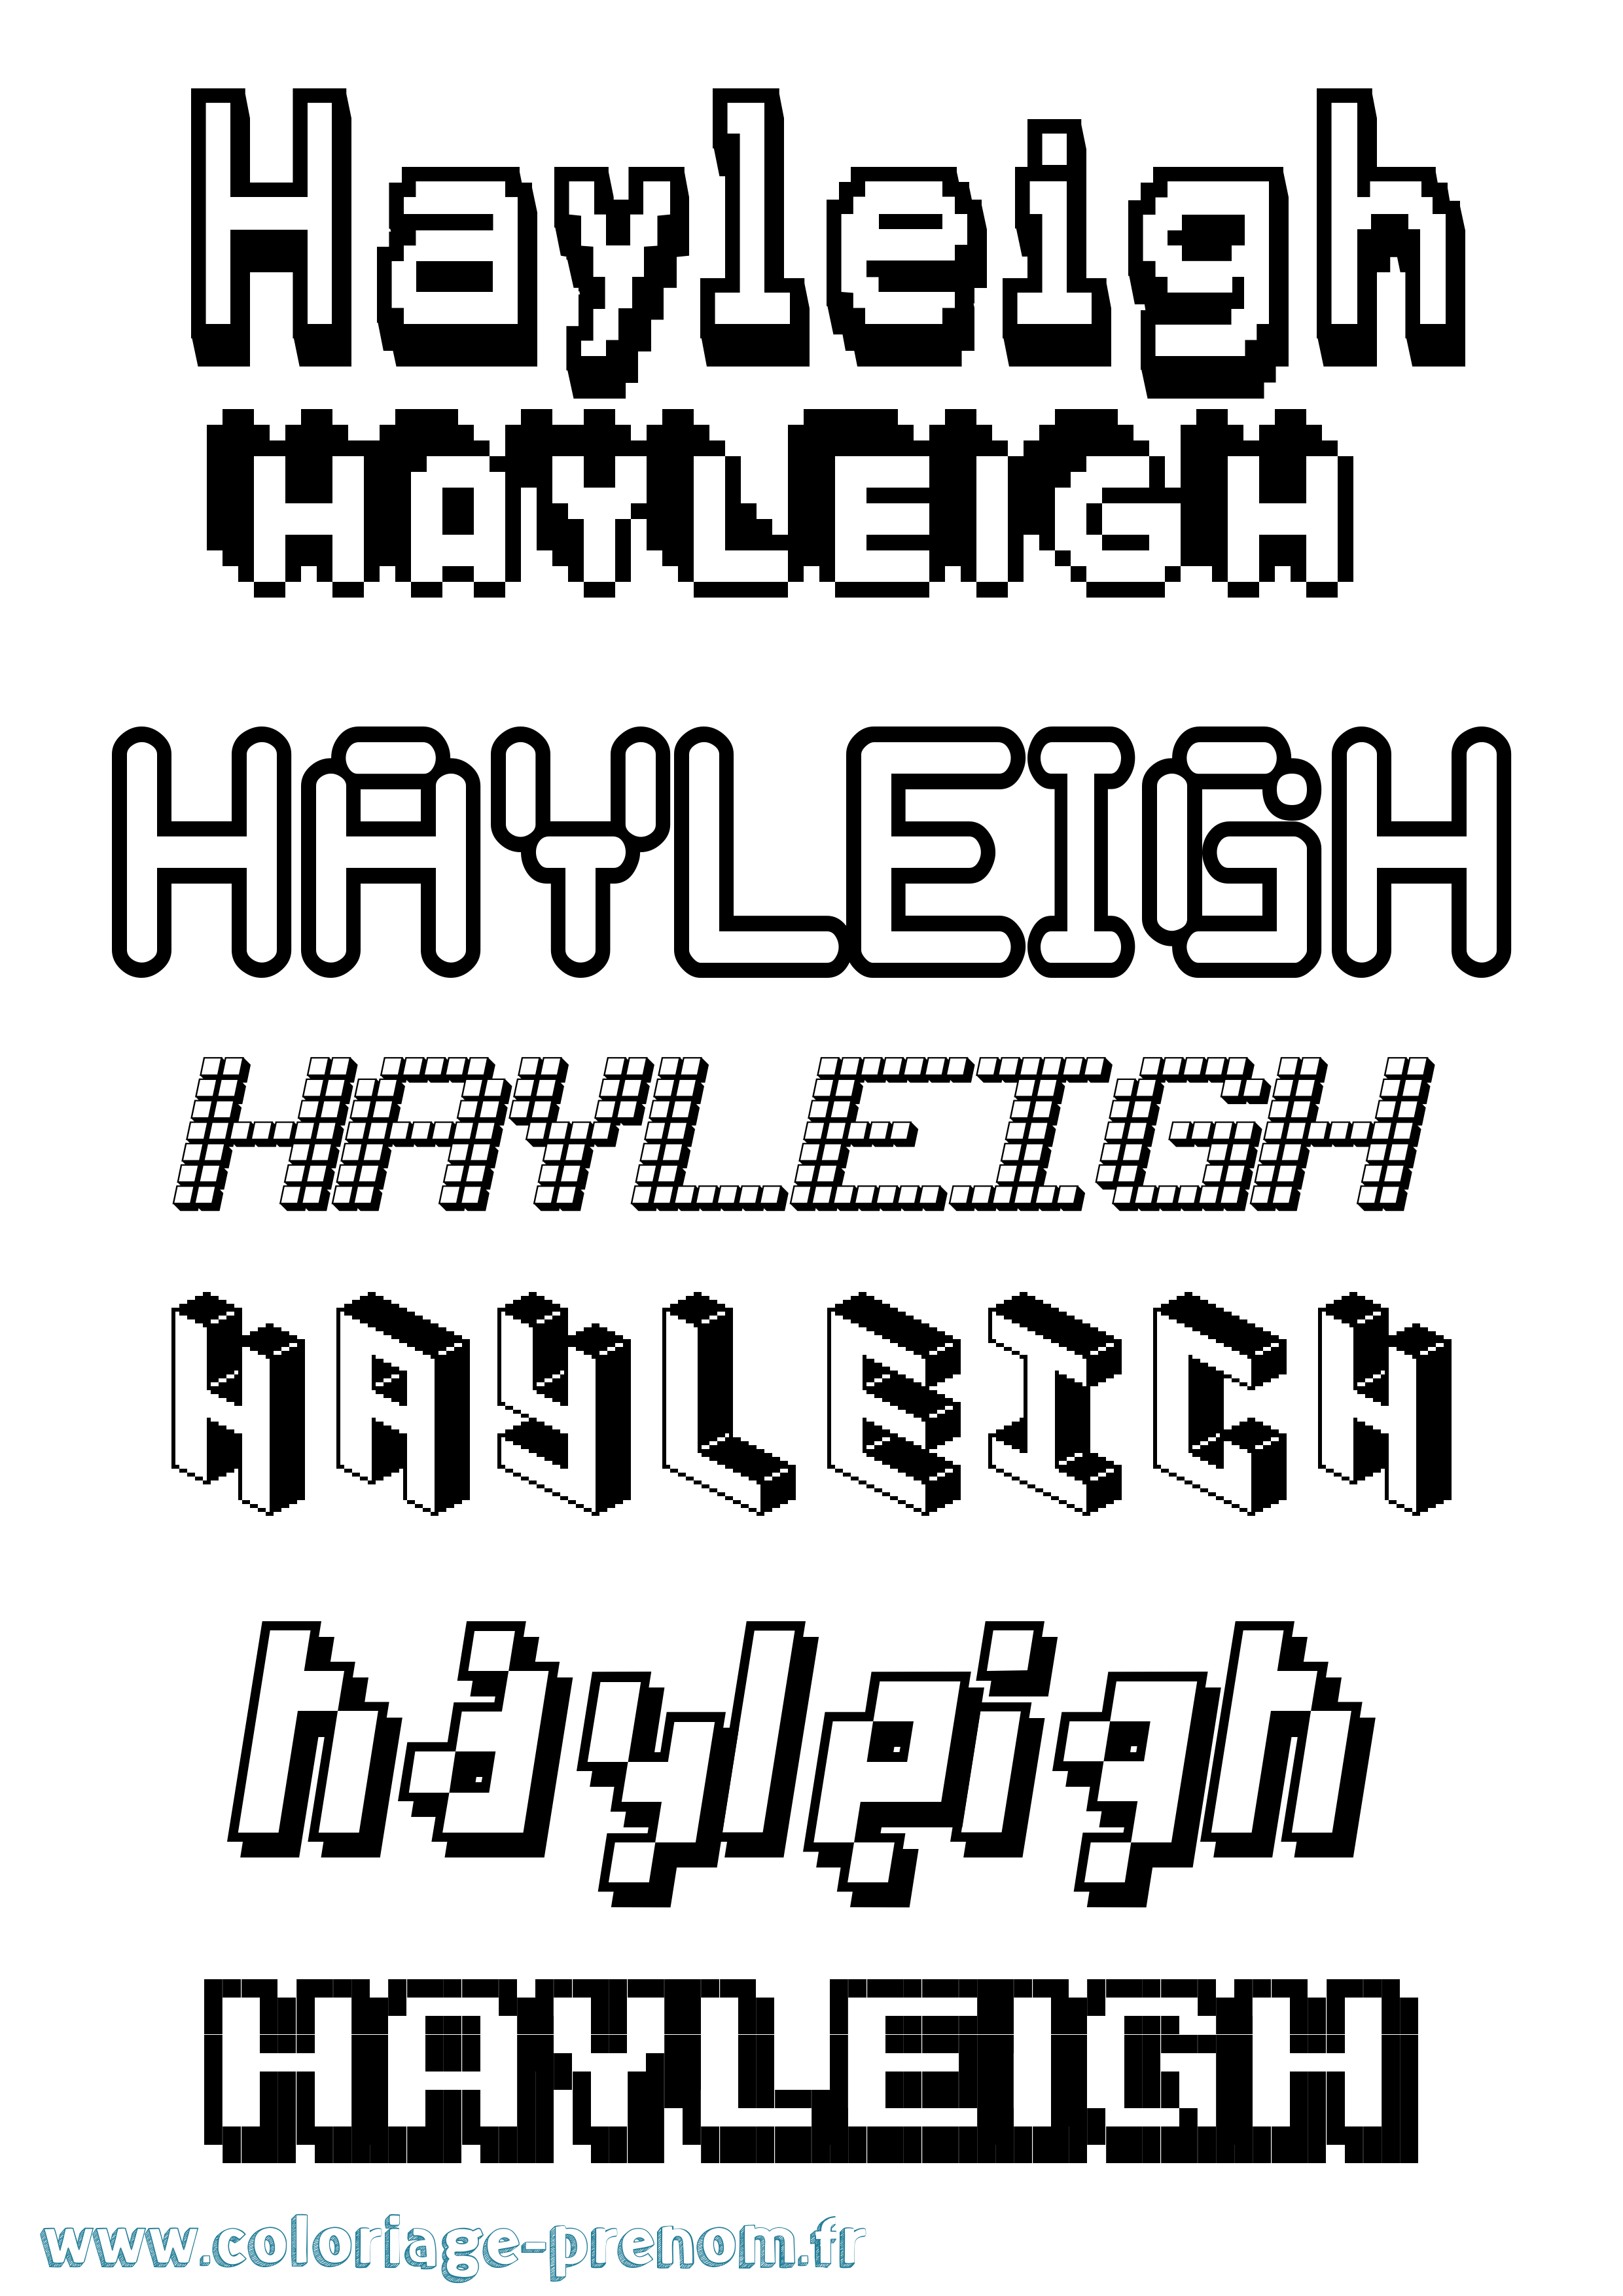 Coloriage prénom Hayleigh Pixel